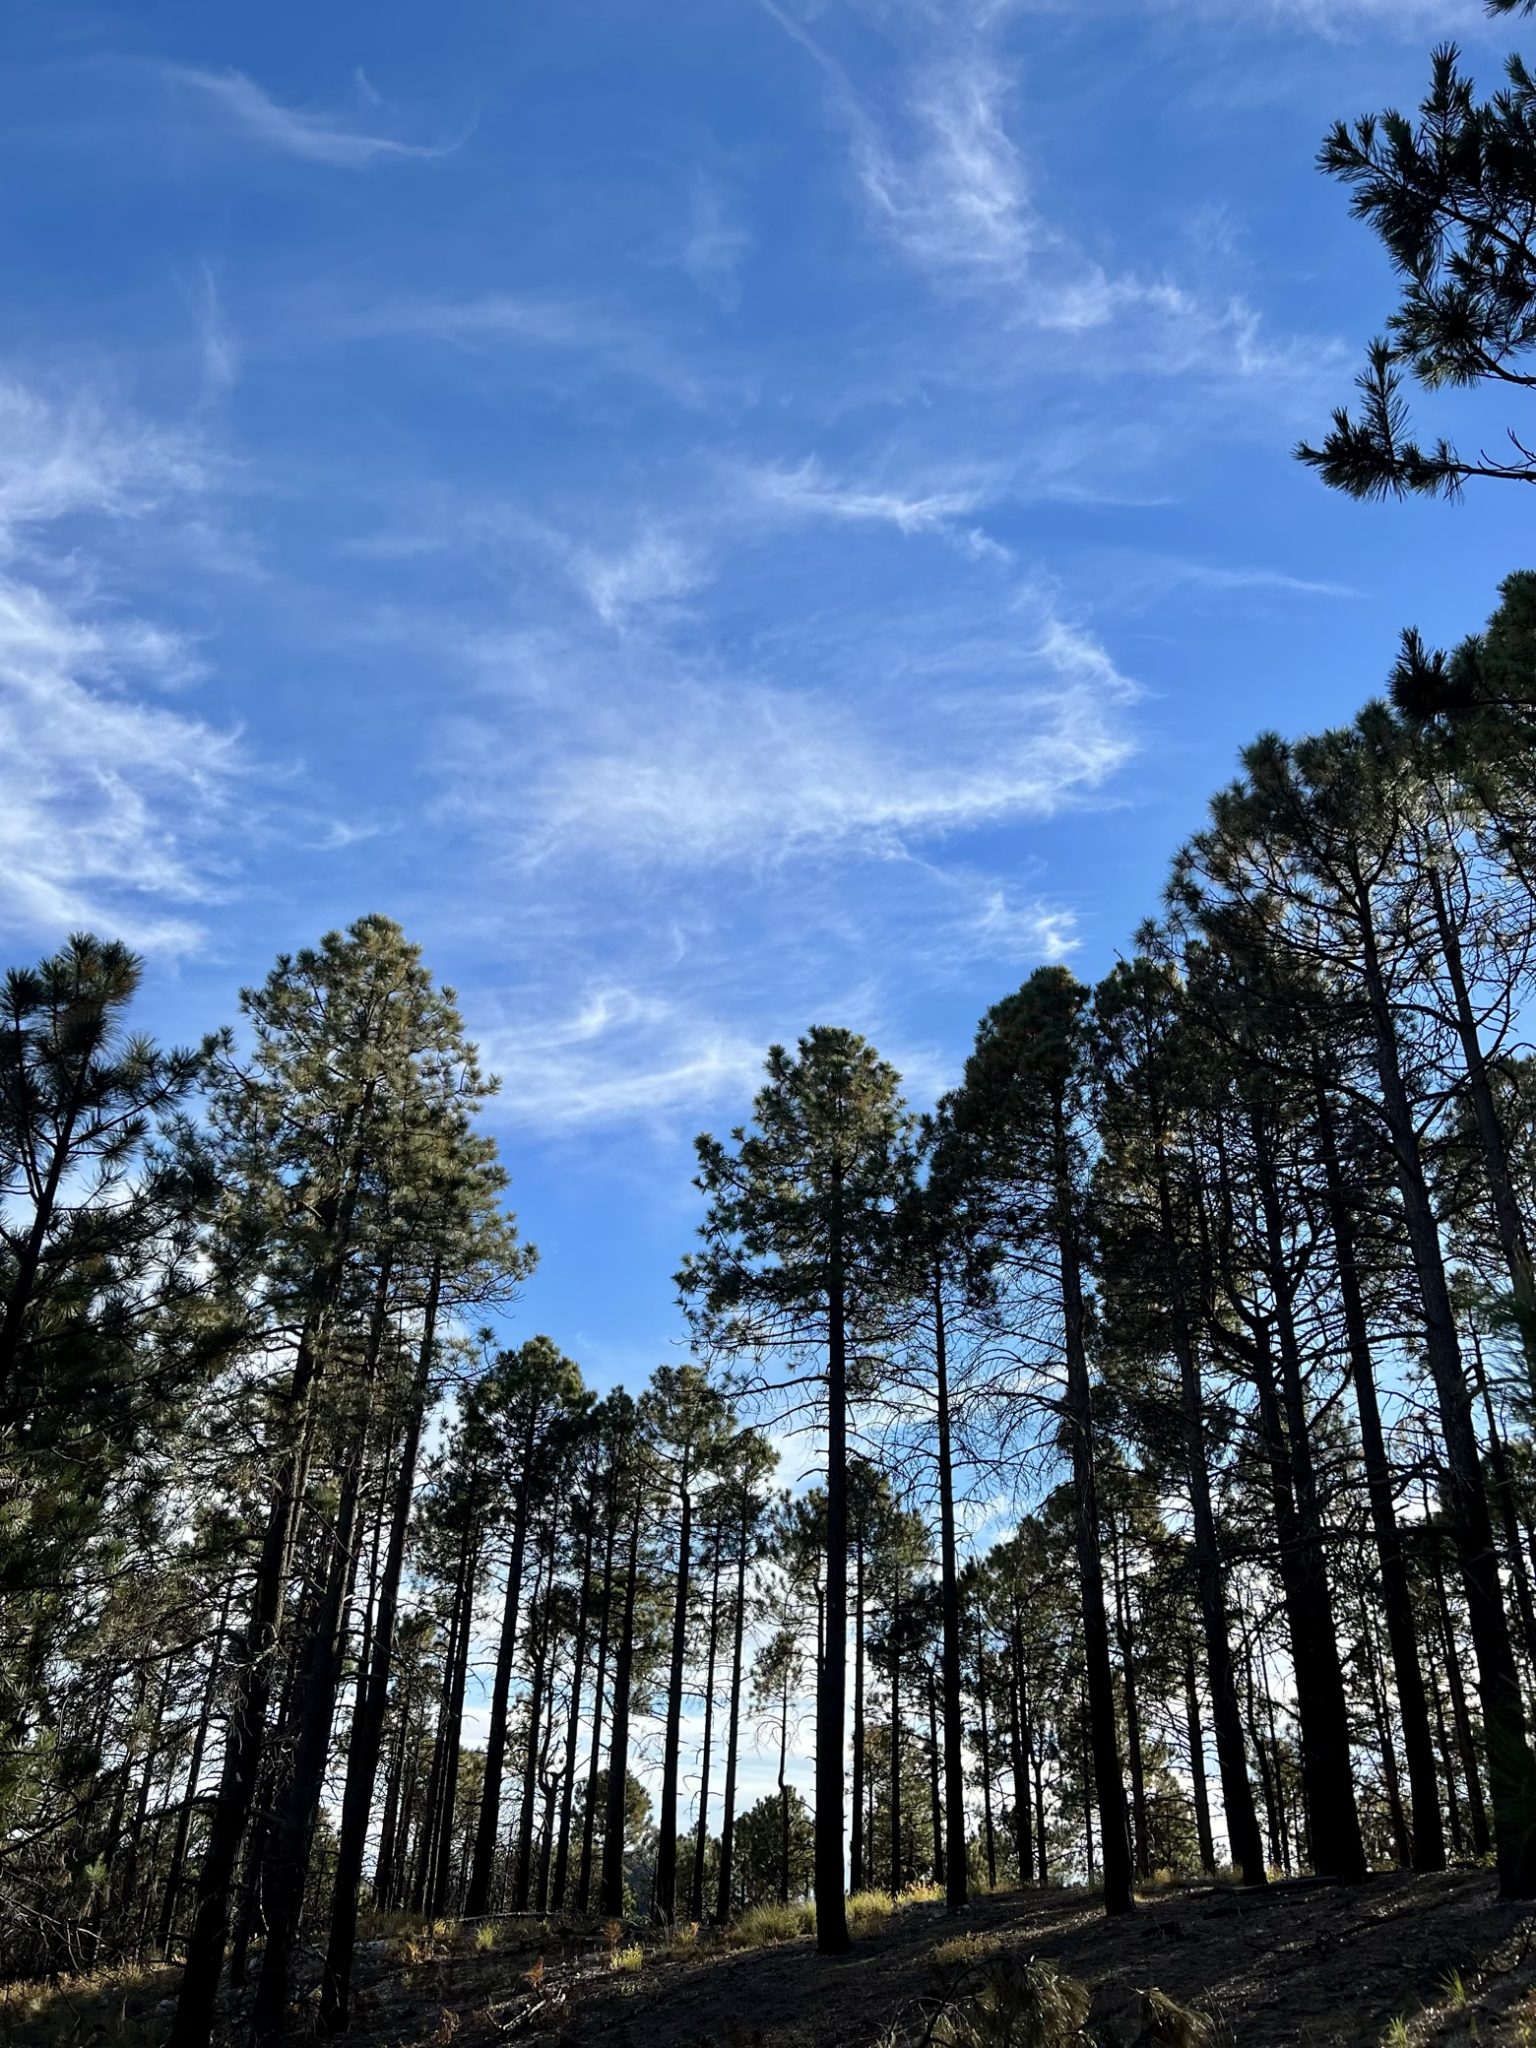 A sky island of pines